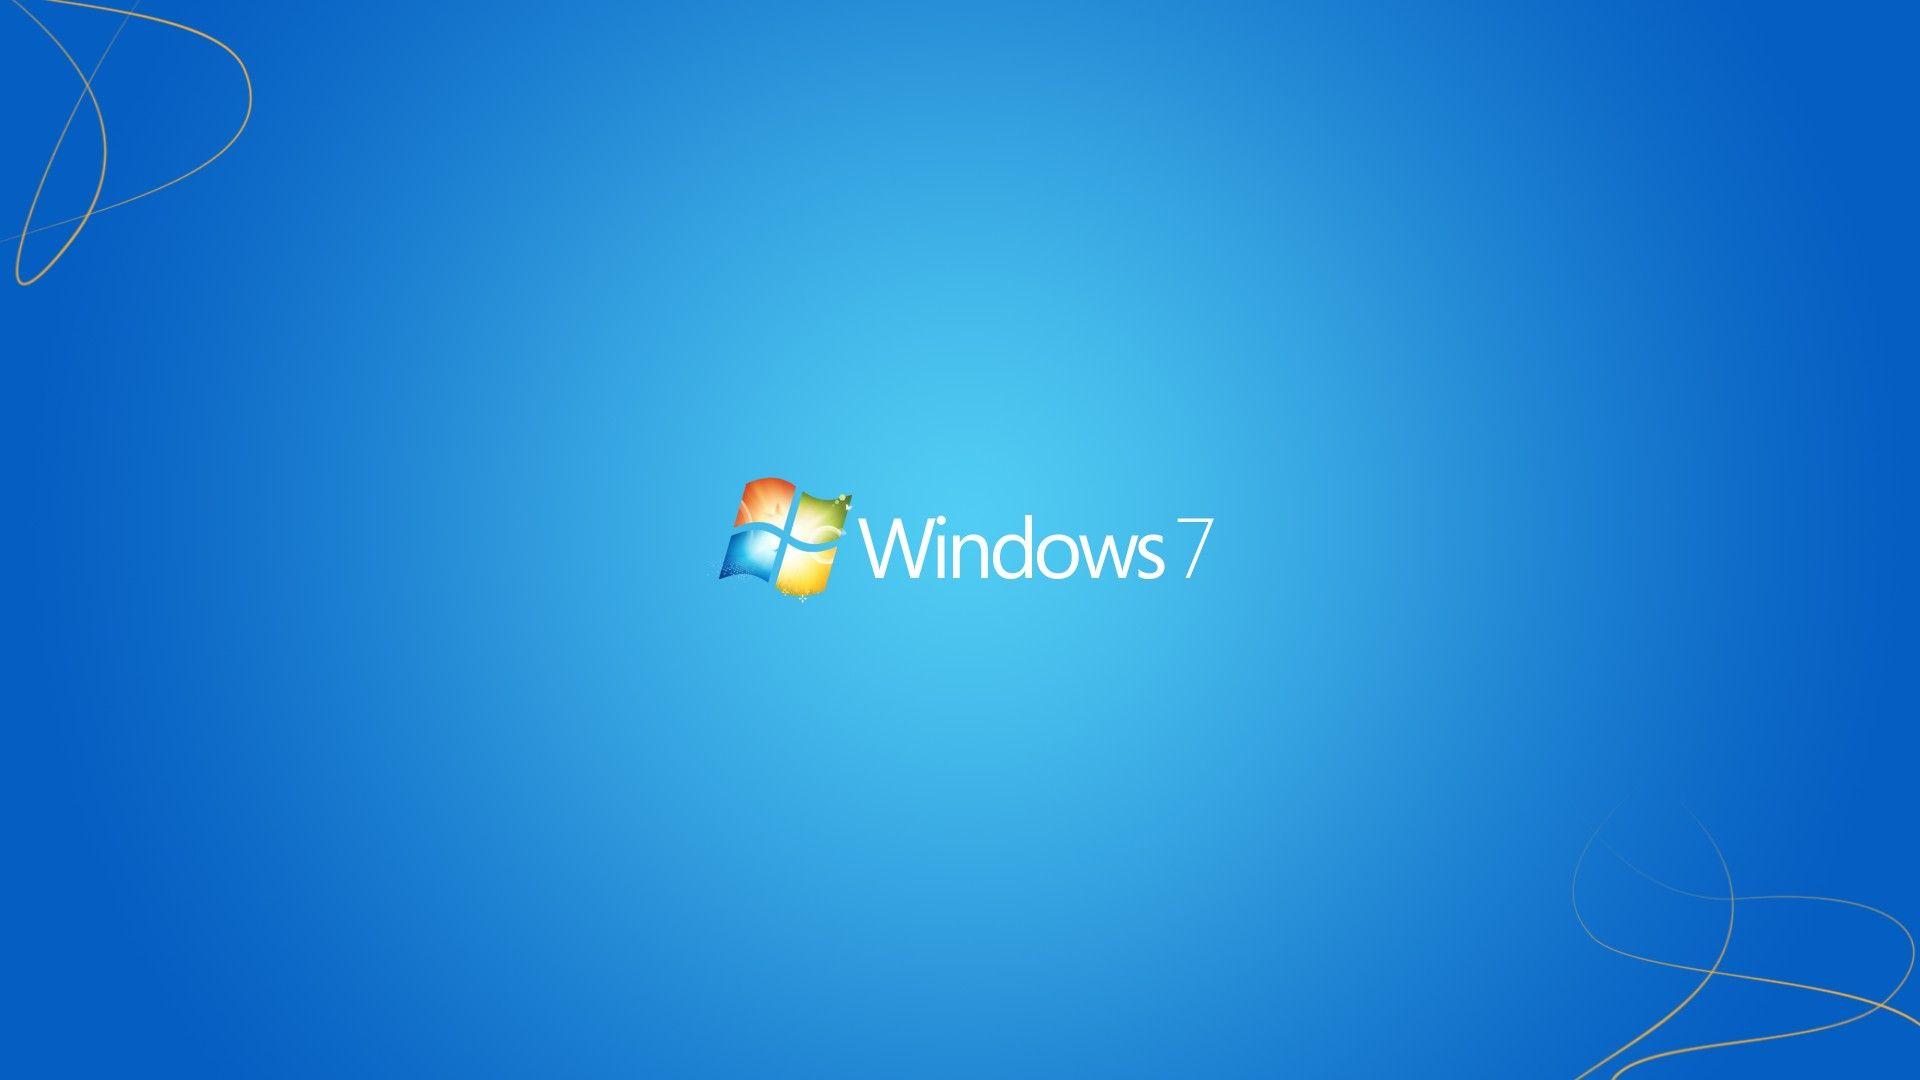 Windows 7 wallpaperDownload free awesome full HD